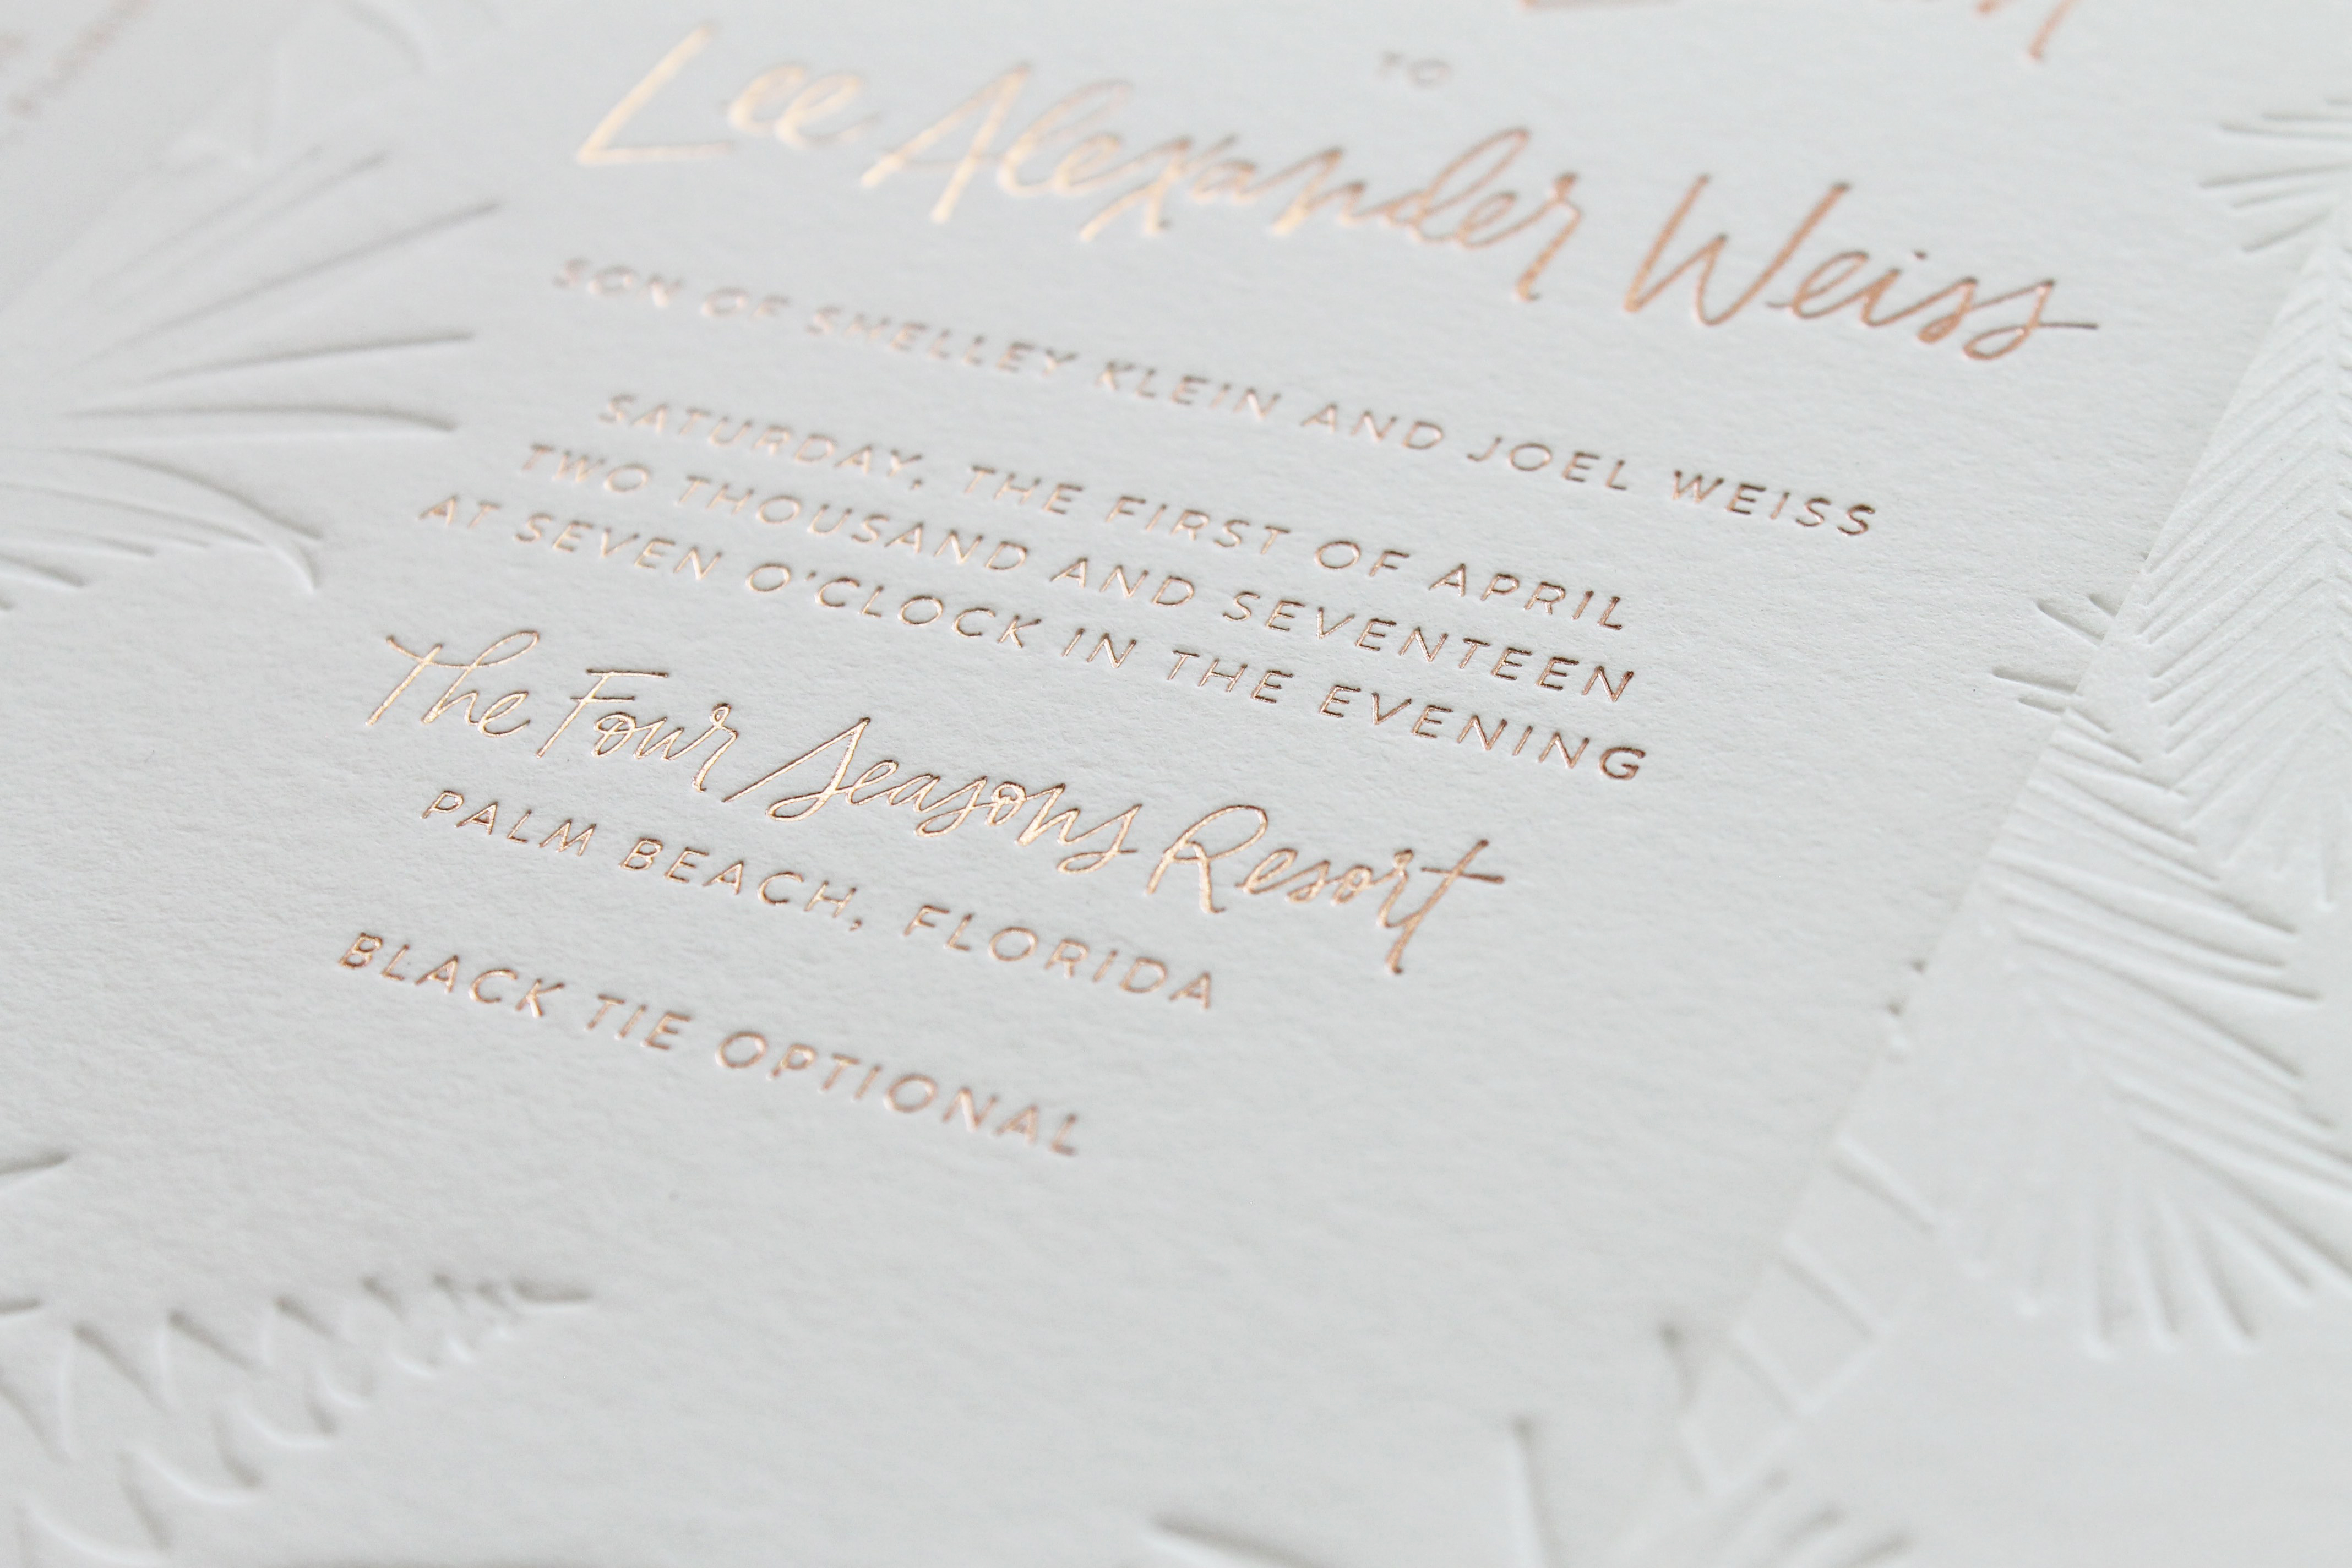 Tropical Minimalism Wedding Invitations by Swell Press